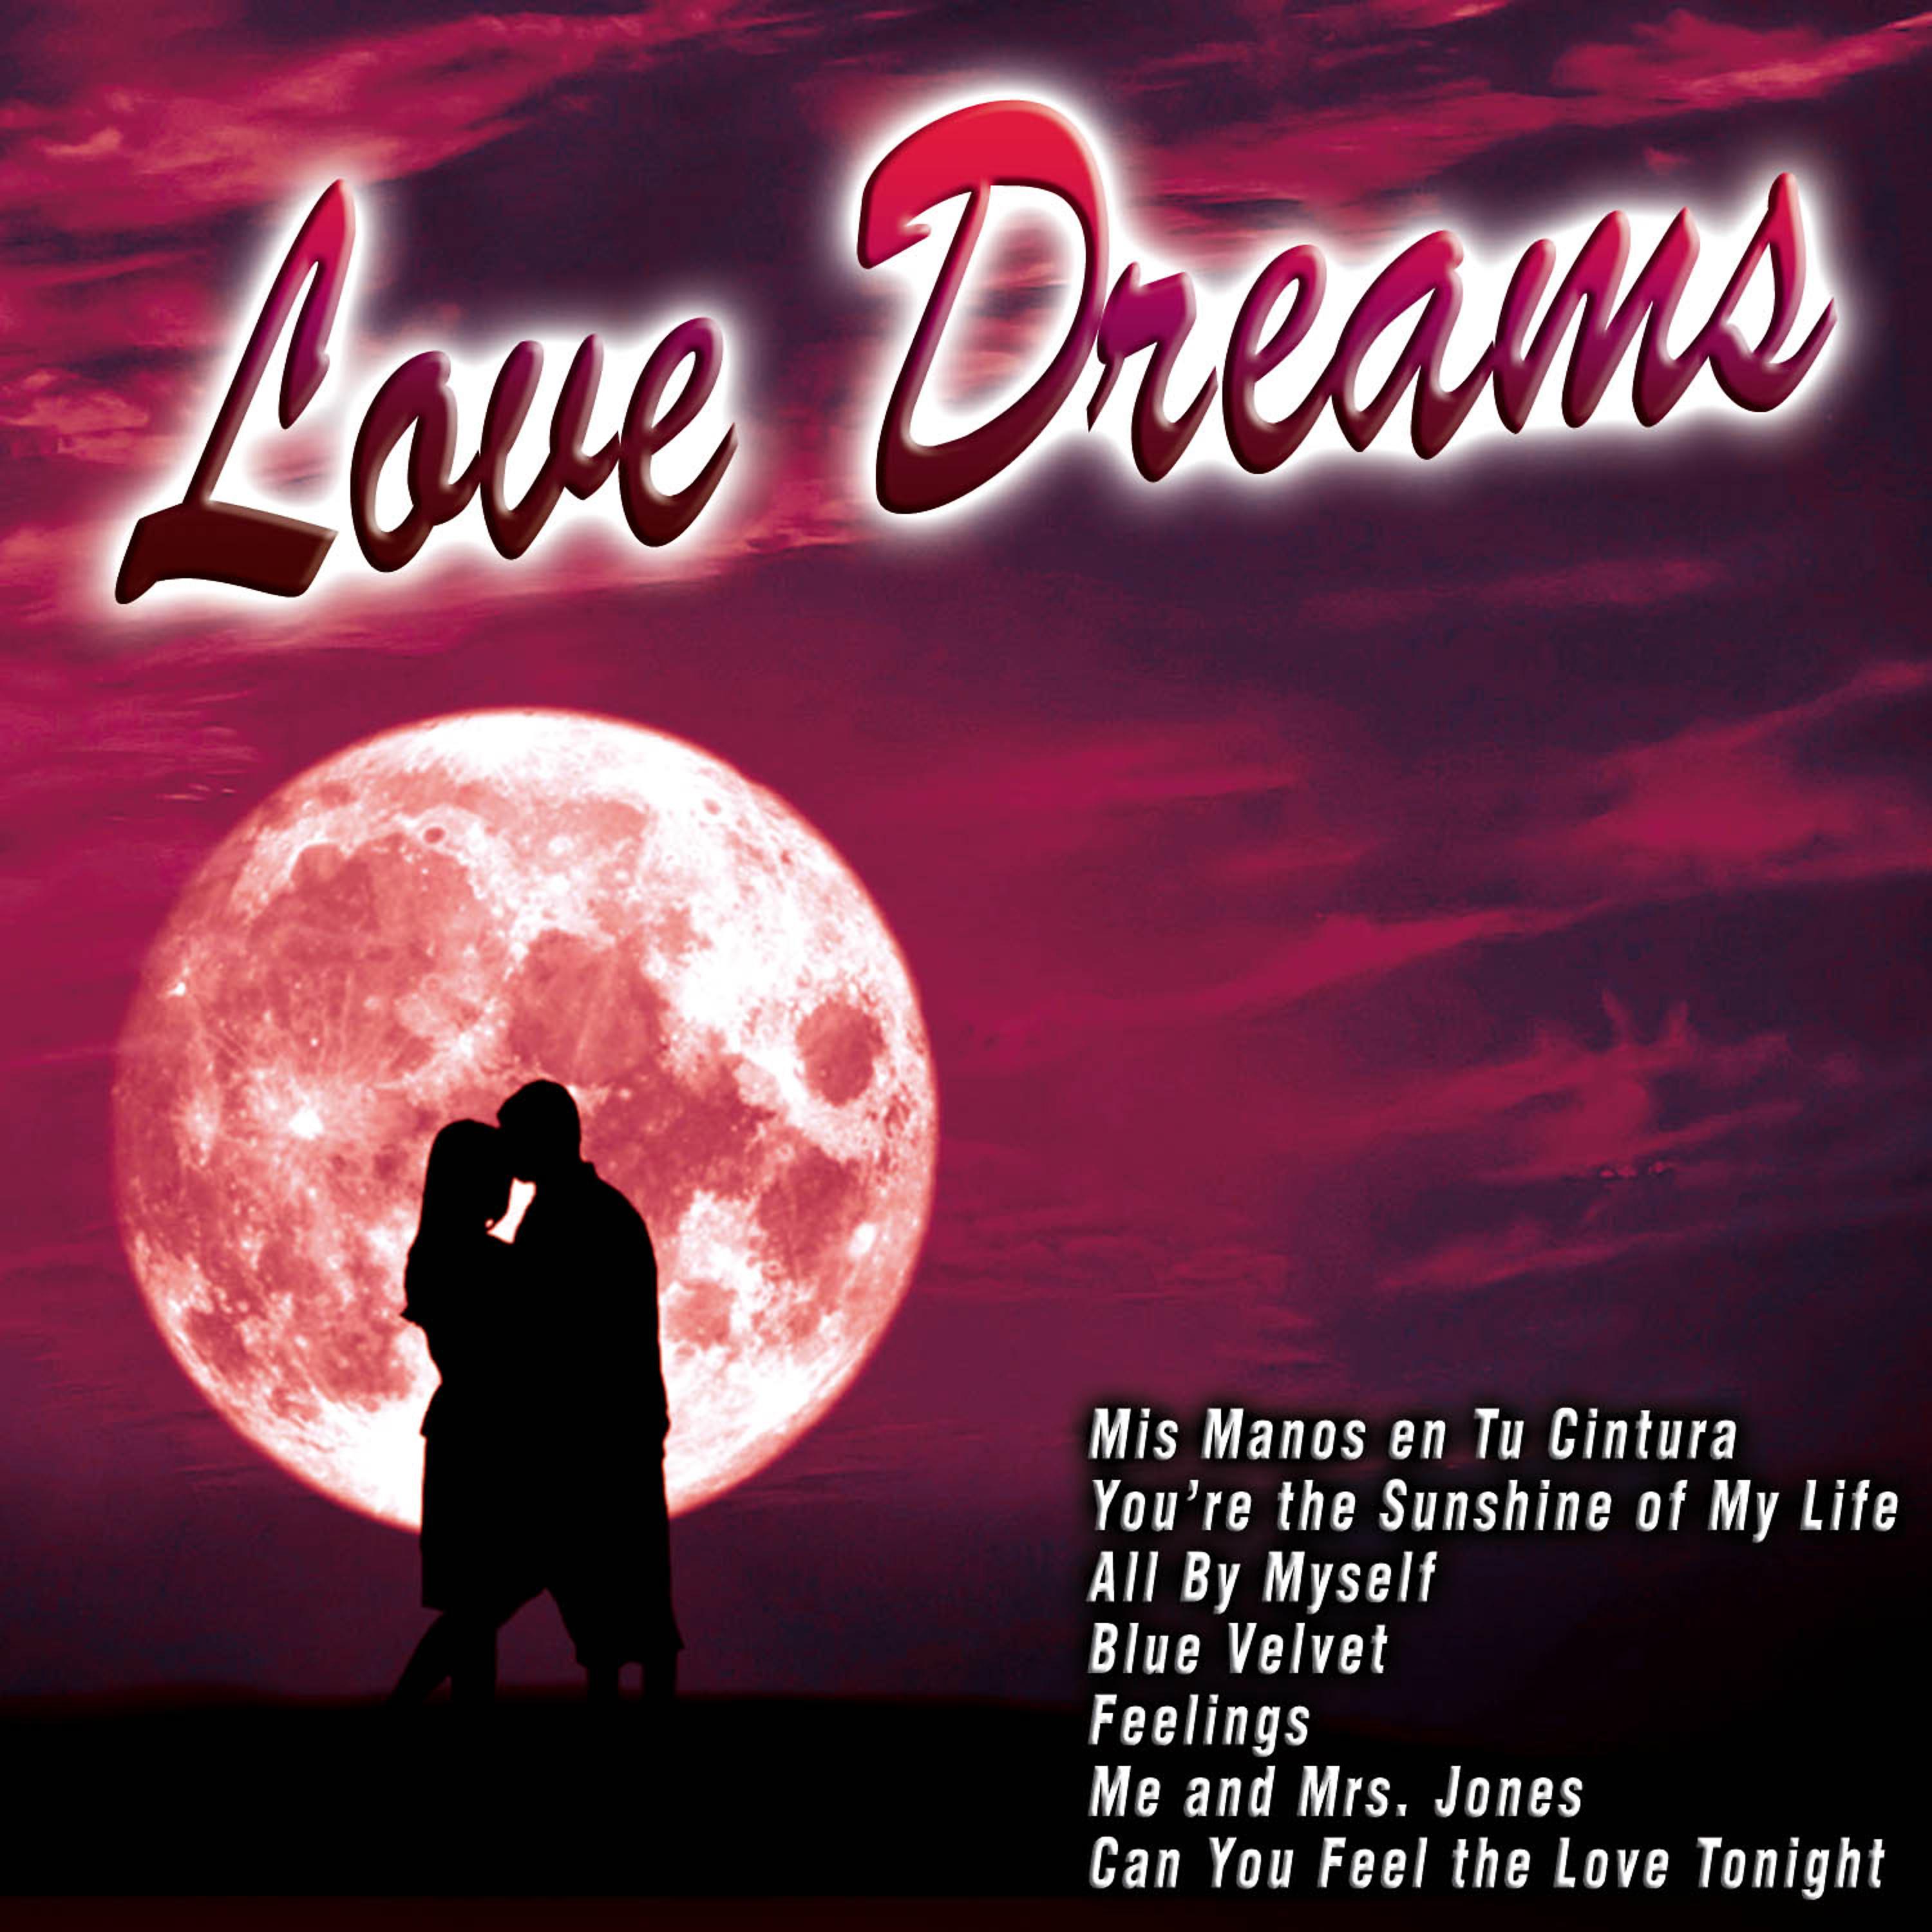 Постер альбома Love Dreams